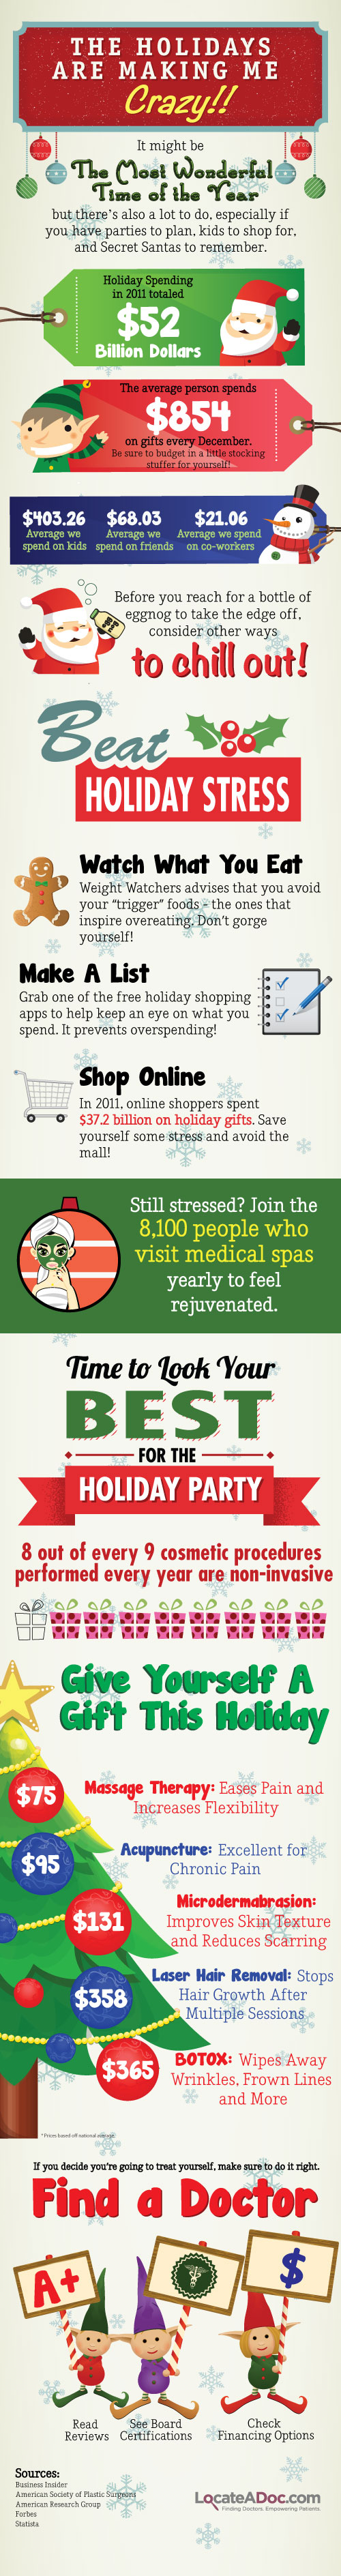 Holiday Stress? Relax At a Medical Spa!